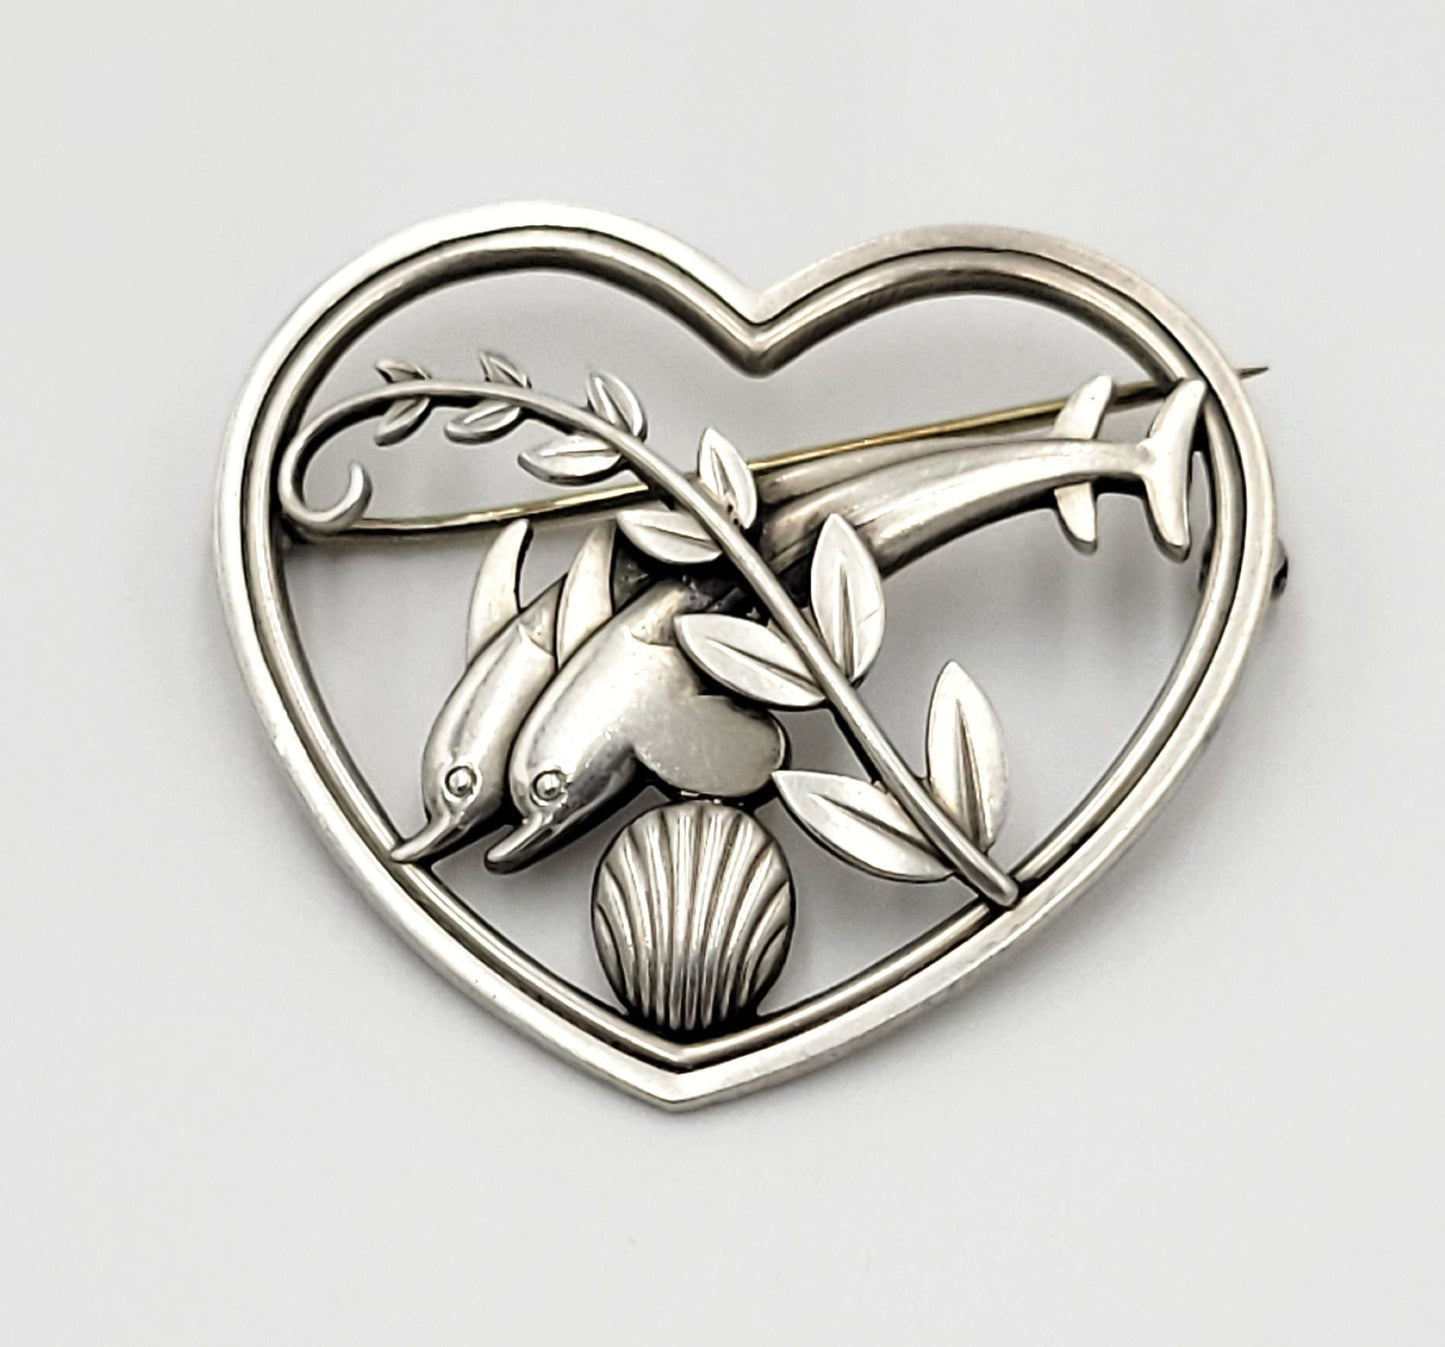 Georg Jensen Jewelry Danish Designer Georg Jensen LARGE Heart Shaped Dolphins Sterling Brooch #312